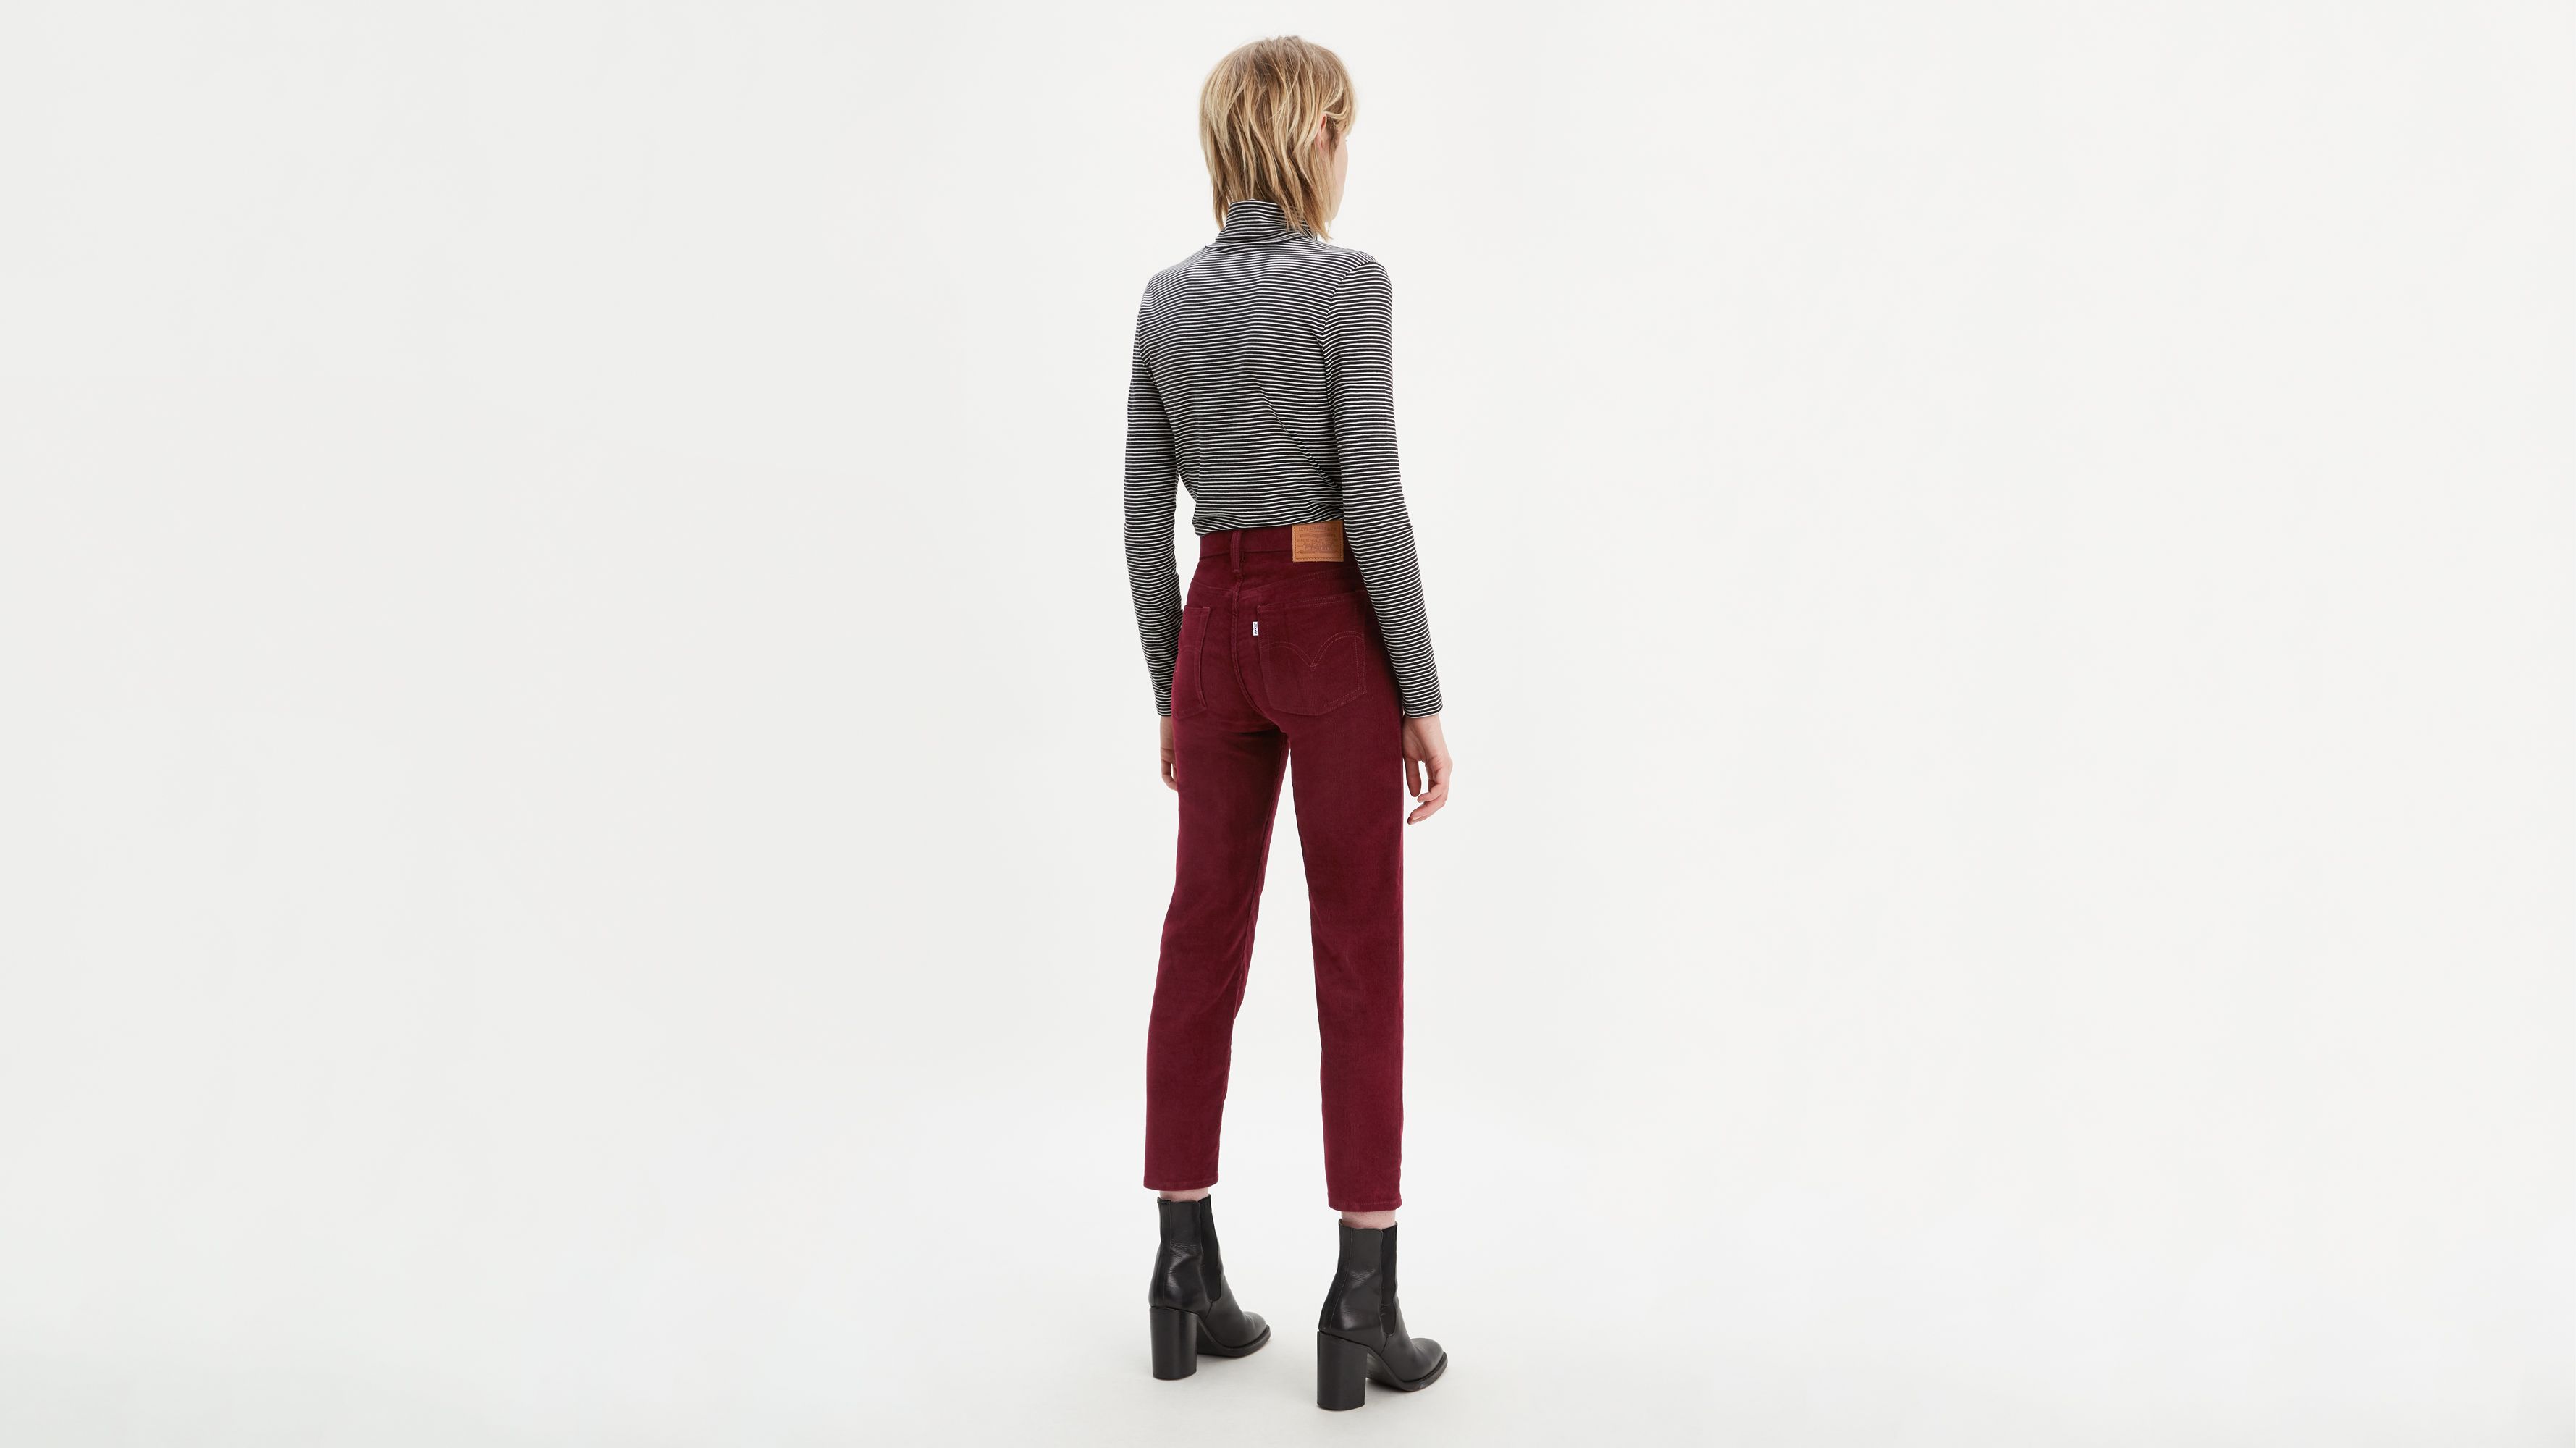 Size 0, low rise, burgundy corduroy pants - Depop